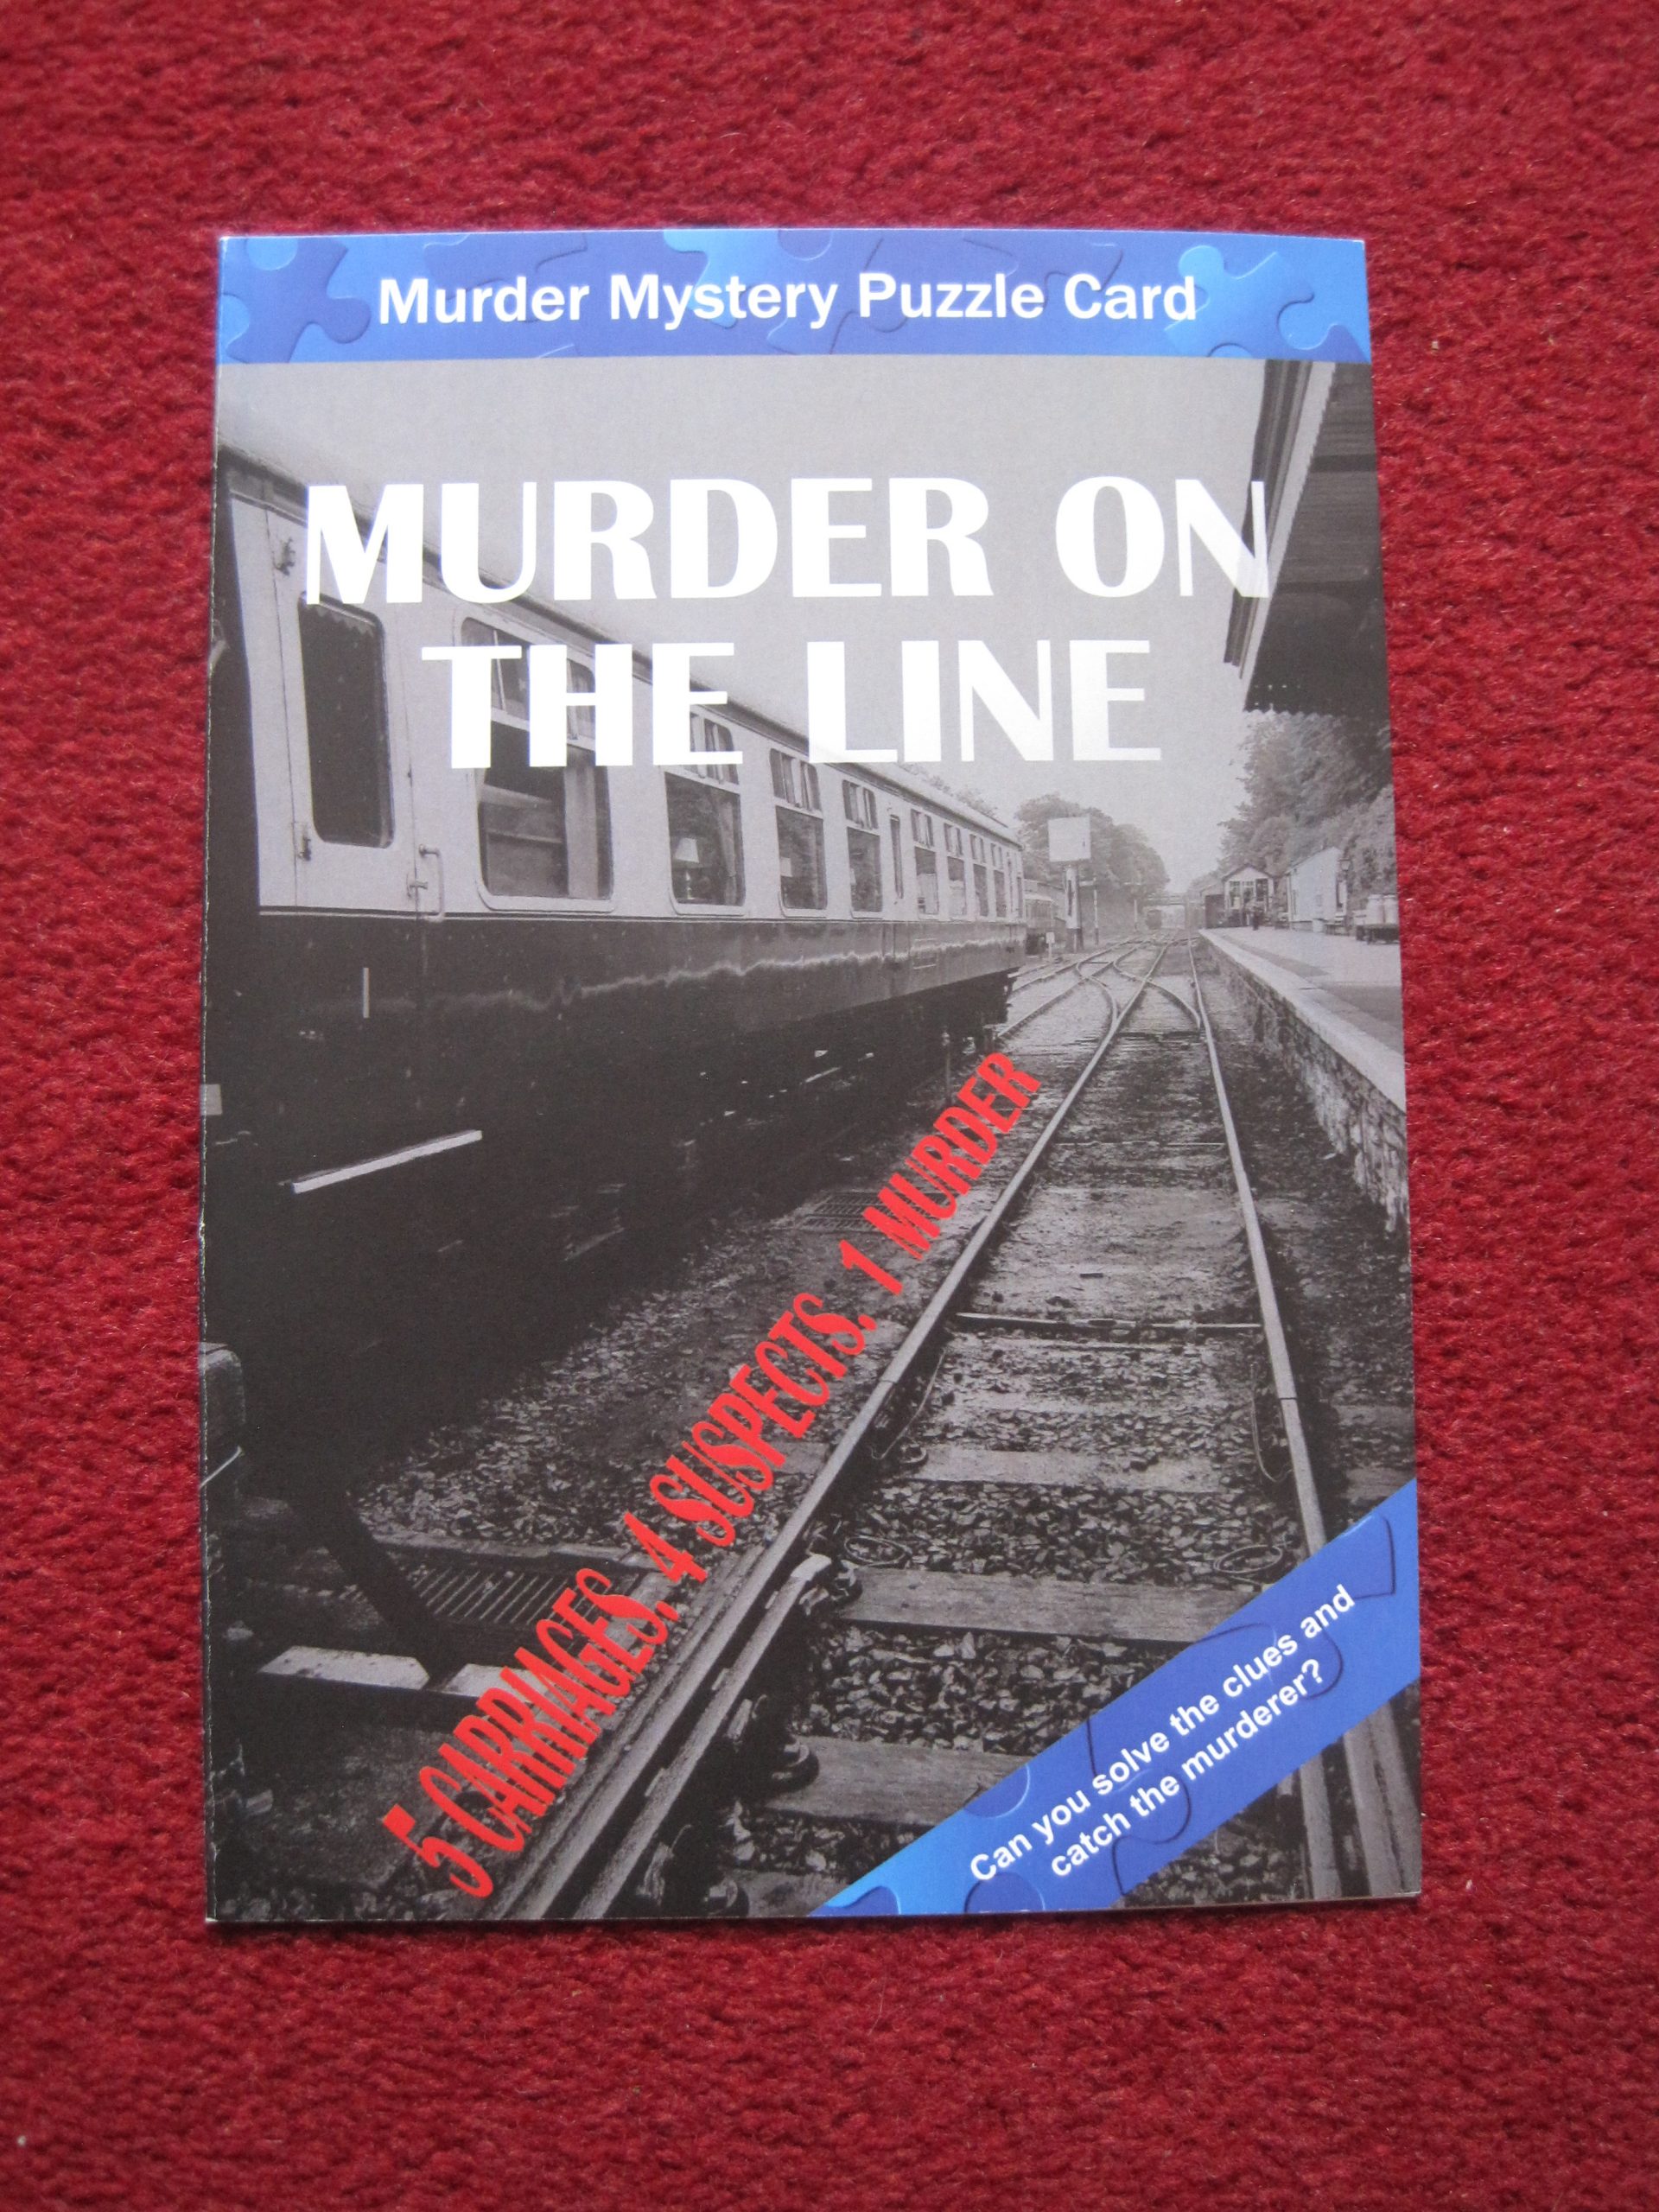 Murder on the line - photo by Juliamaud